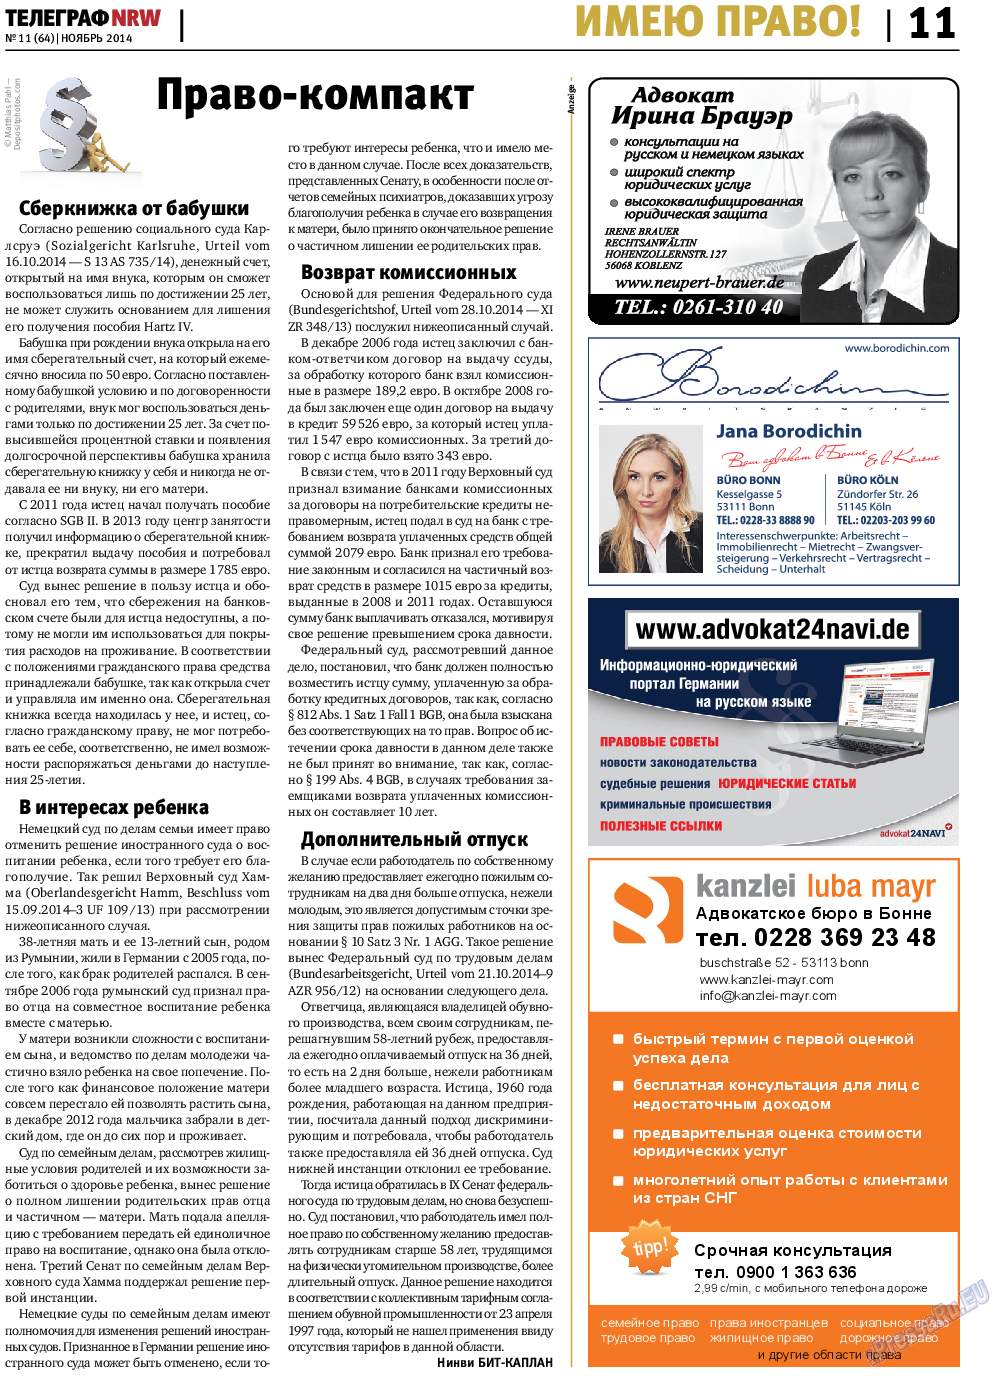 Телеграф NRW, газета. 2014 №11 стр.11